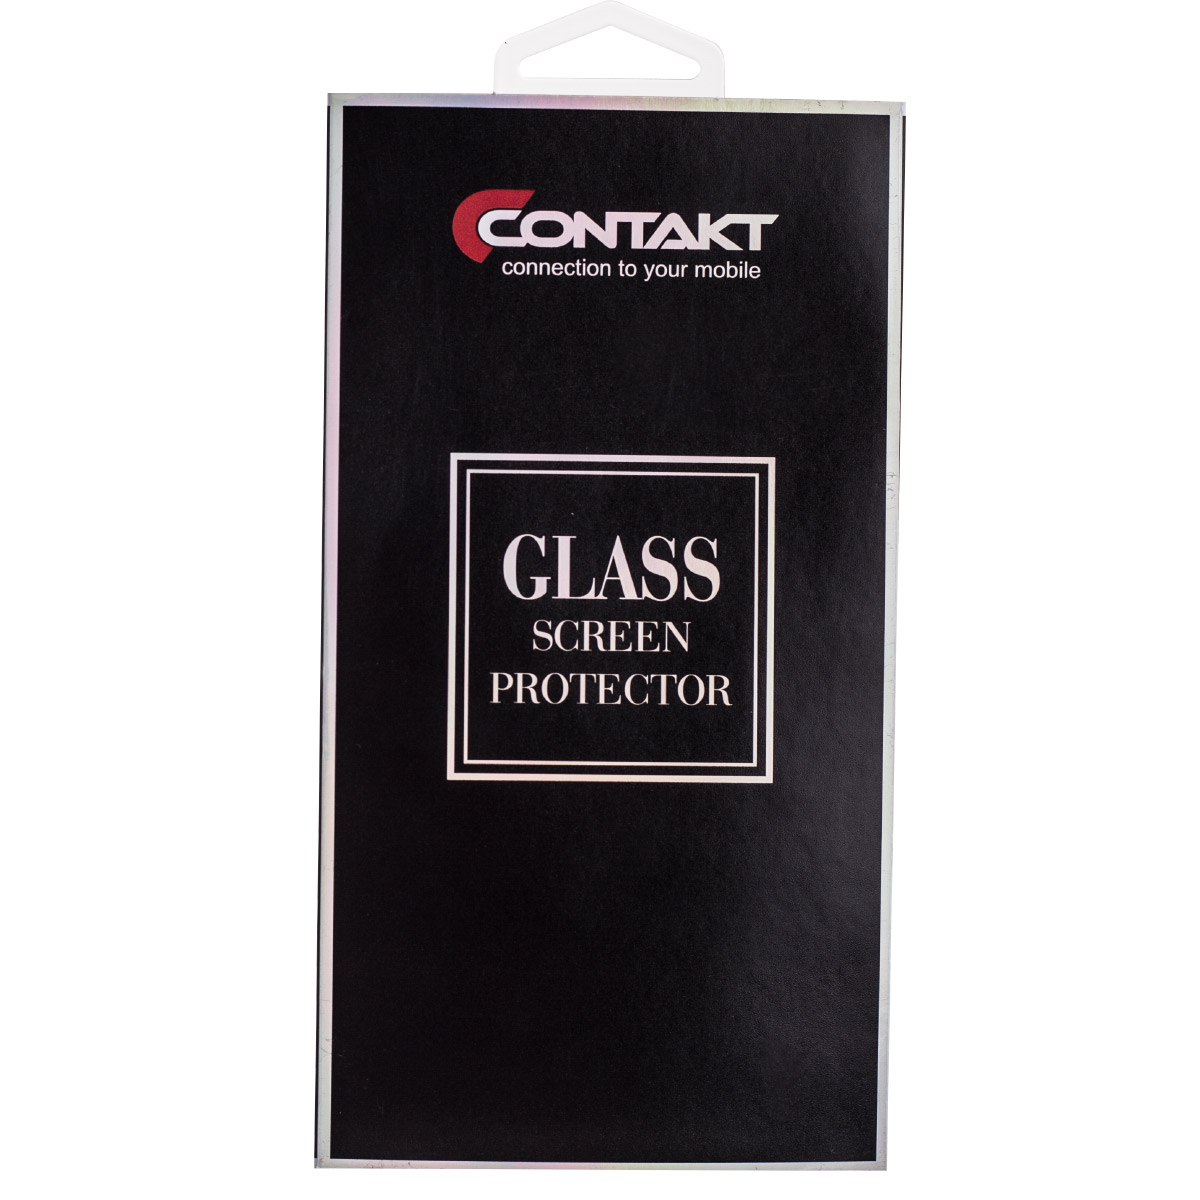 Folie sticla Sony Xperia Z5 Compact, Contakt thumb